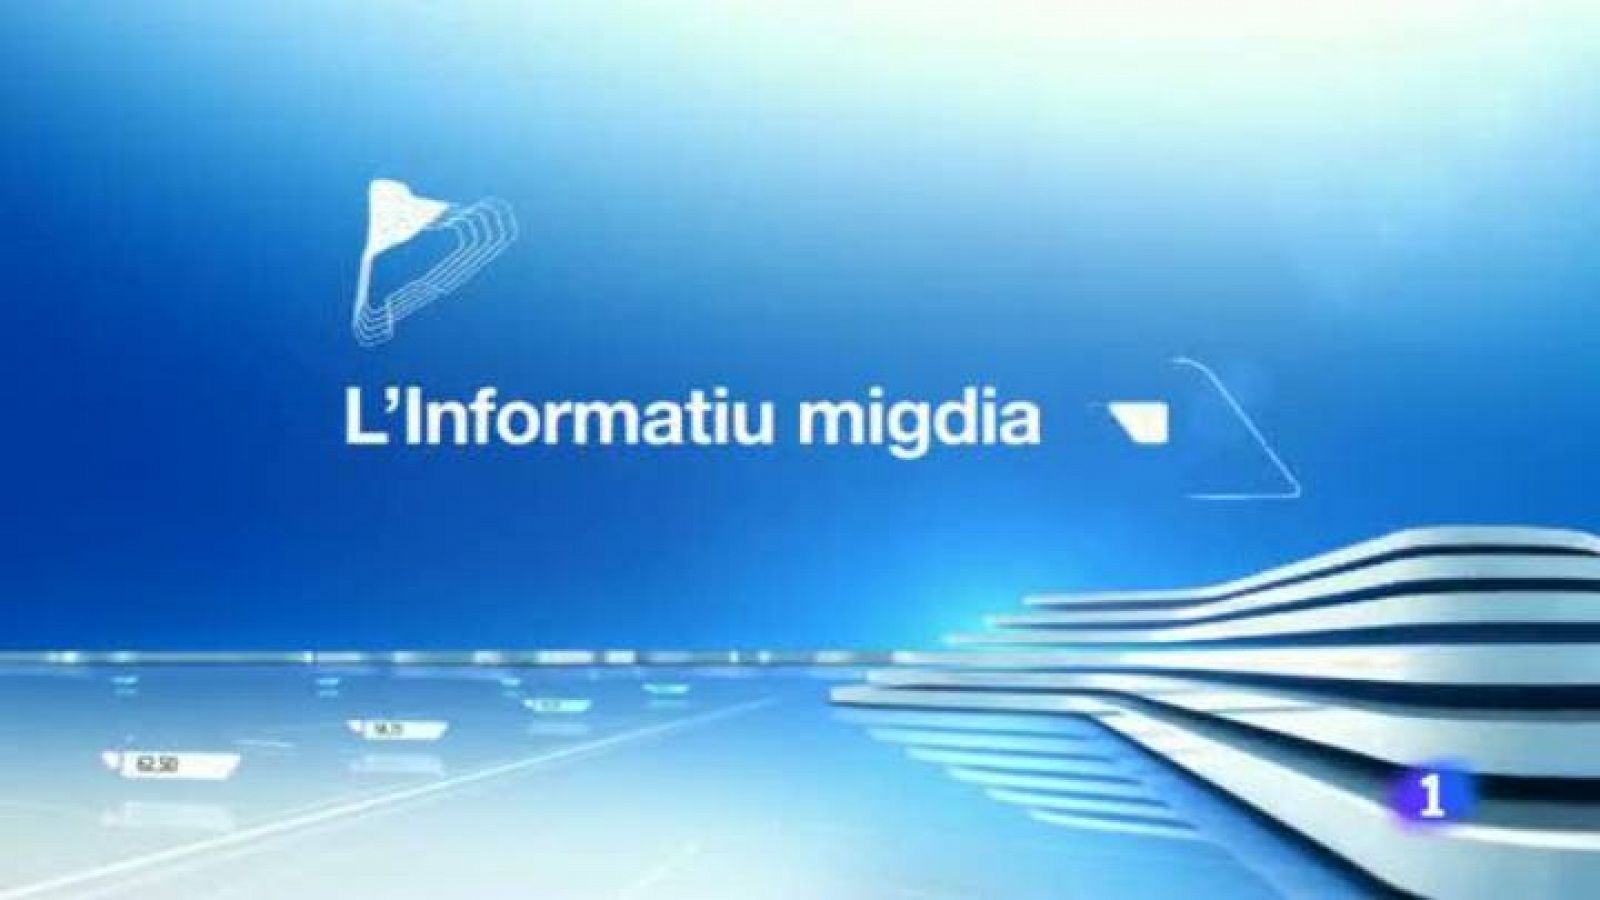 L'Informatiu: L'Informatiu migdia - 01/07/14 | RTVE Play